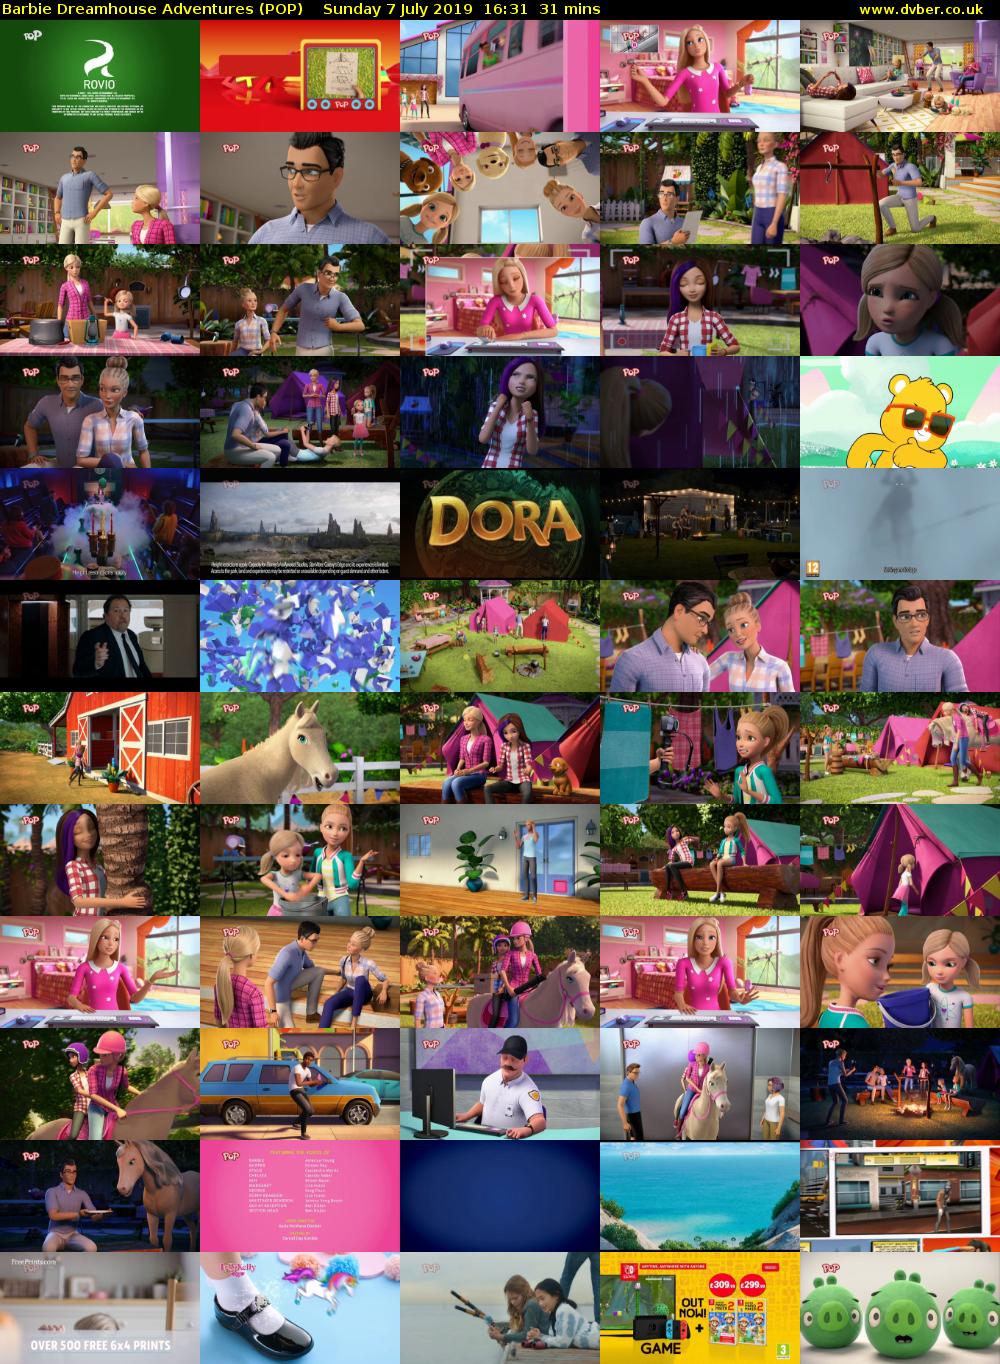 Barbie Dreamhouse Adventures (POP) Sunday 7 July 2019 16:31 - 17:02